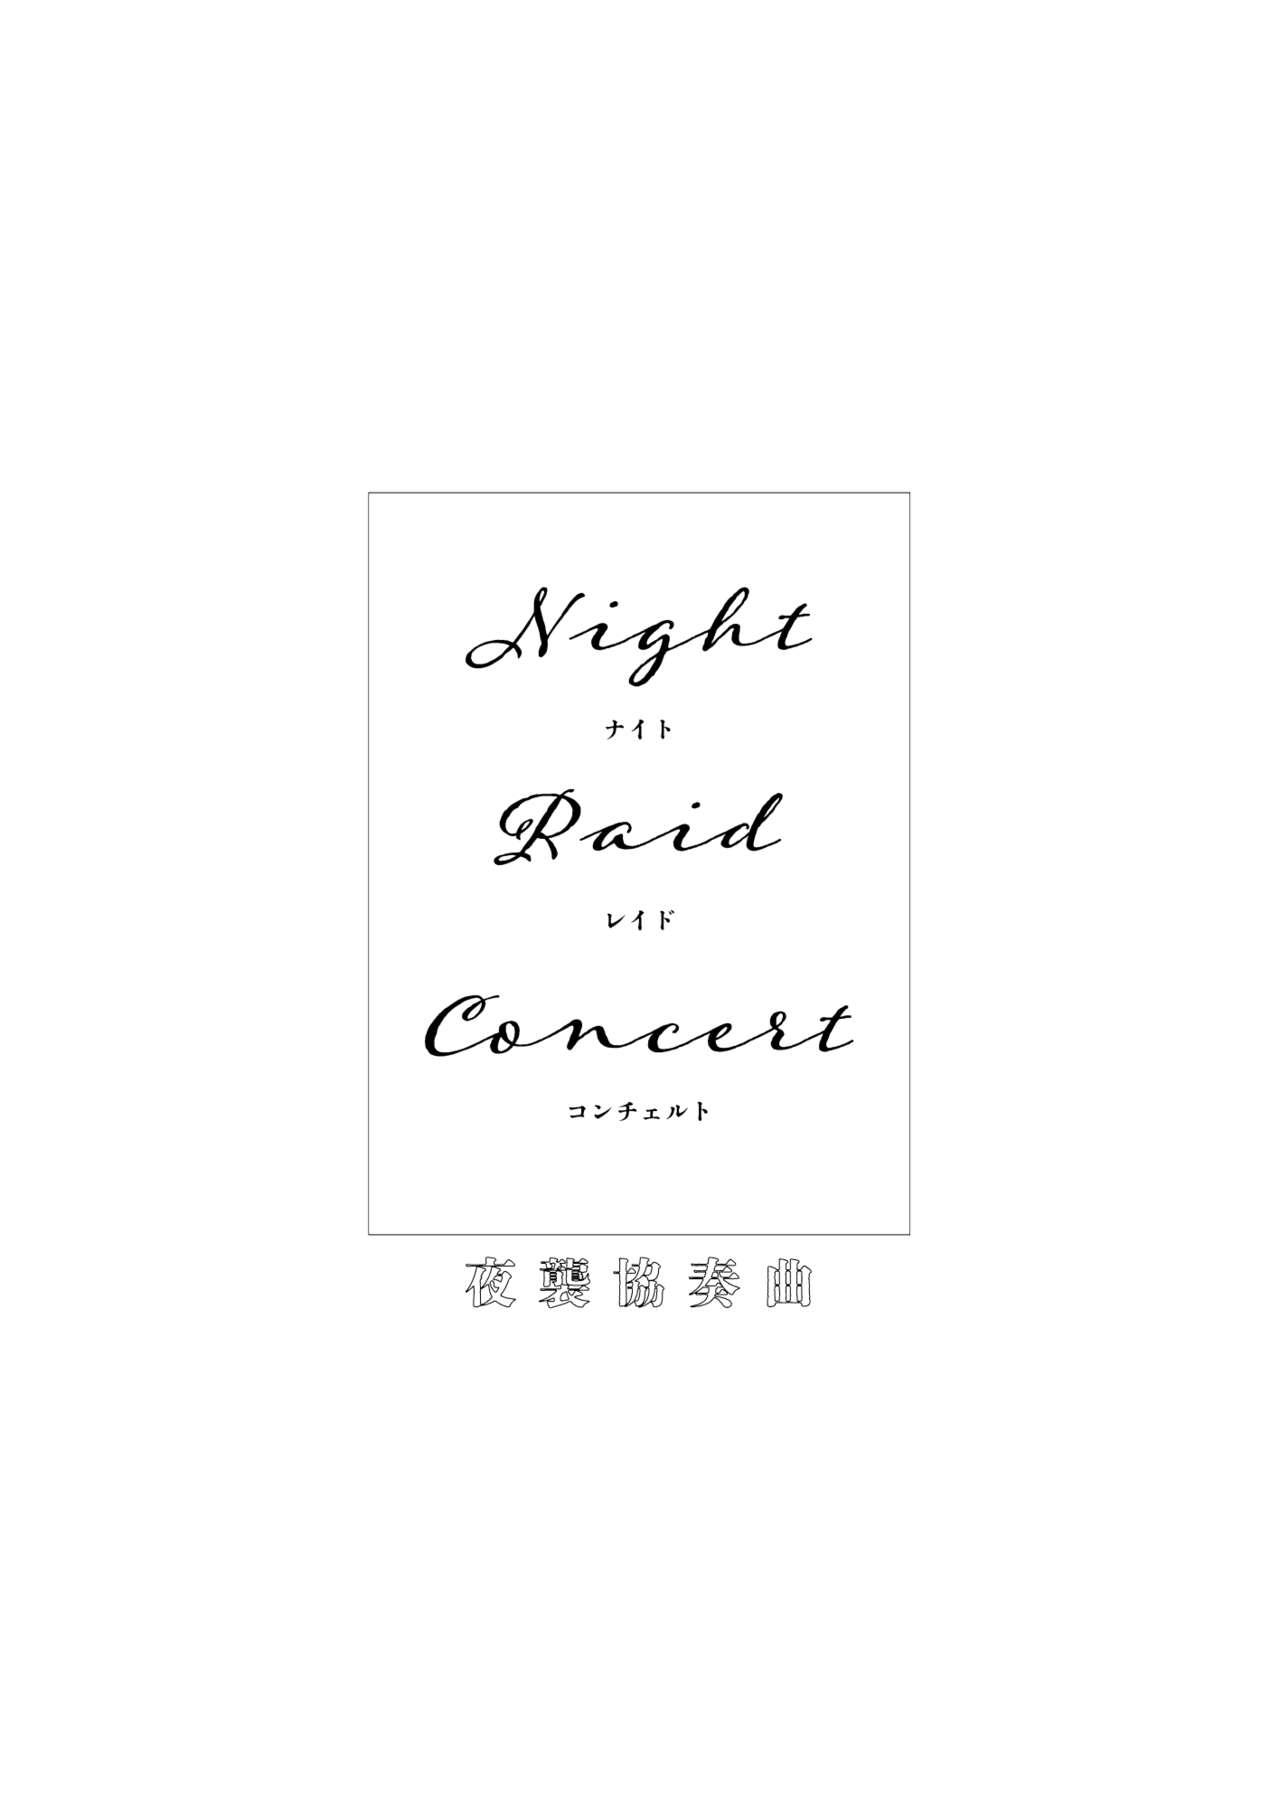 Night raid concert - Foto 3